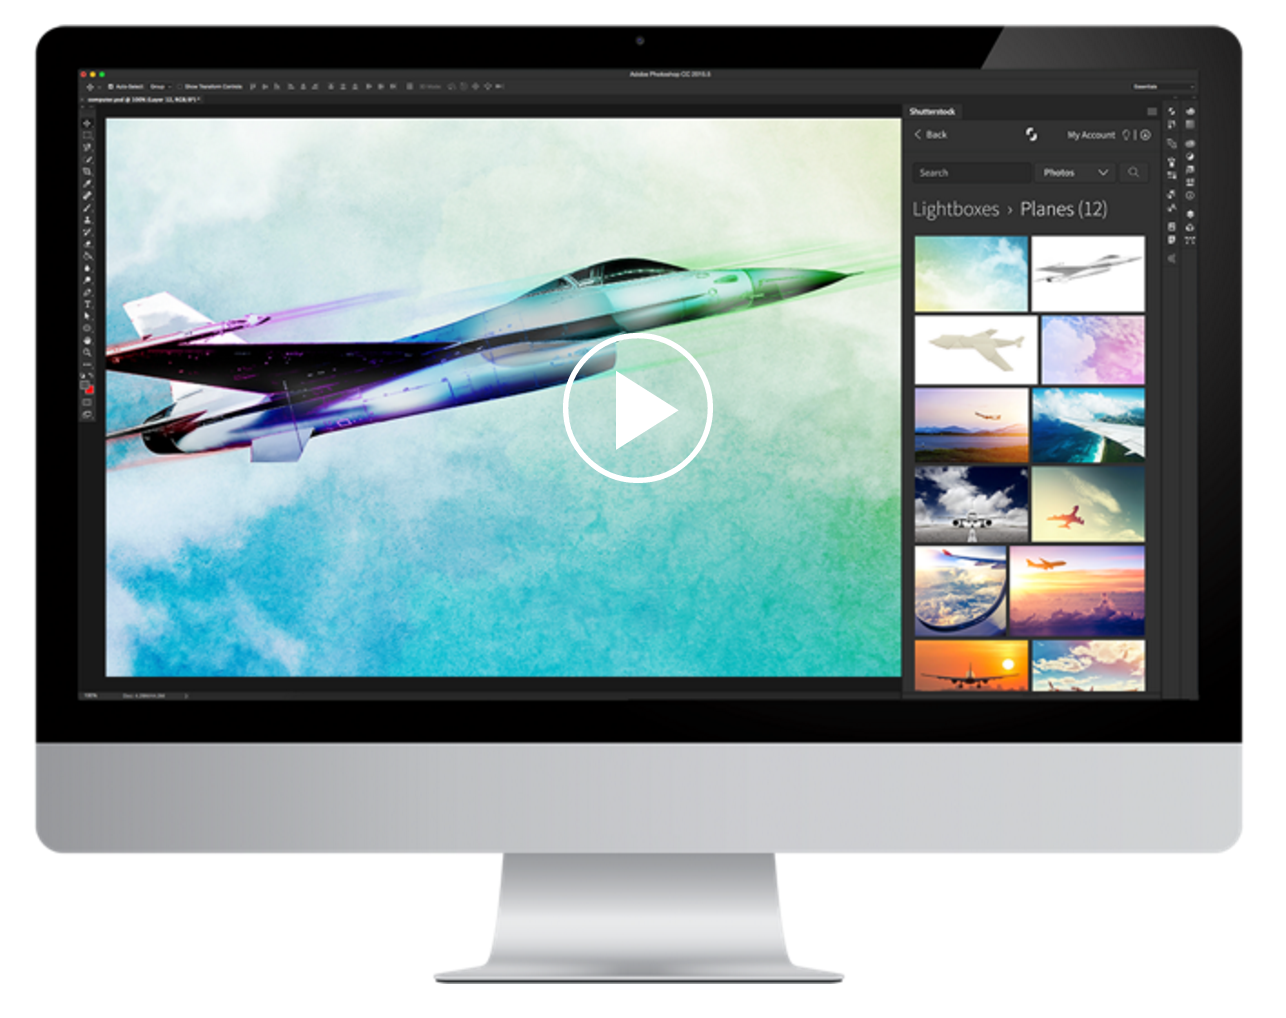 Shutterstock Photoshop Plugin